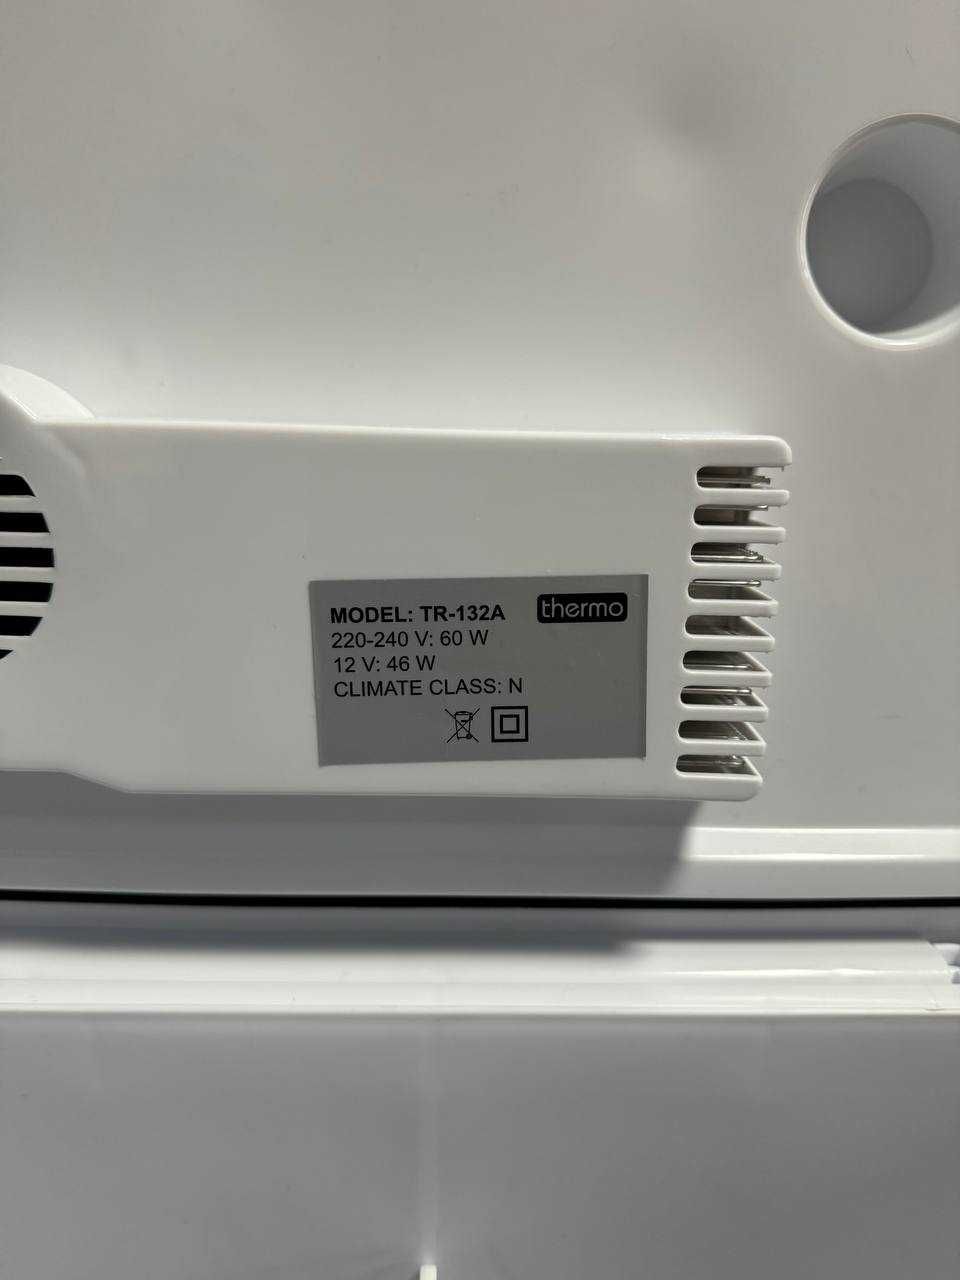 Автомобильный холодильник Thermo TR - 132A